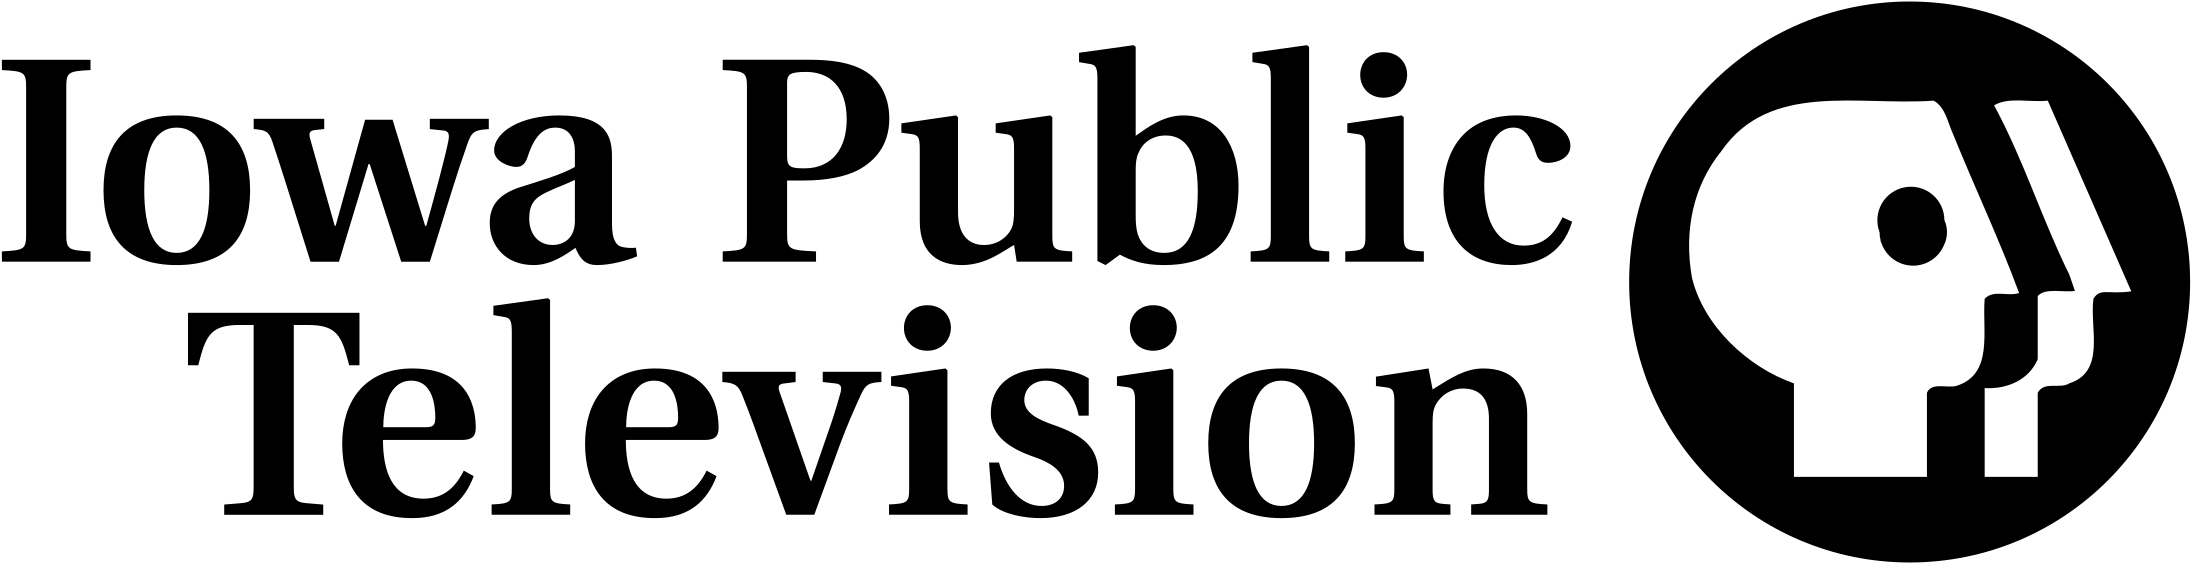 Iowa Public Television Logo Png Transparent - Iowa Public Television Logo (2400x2400), Png Download